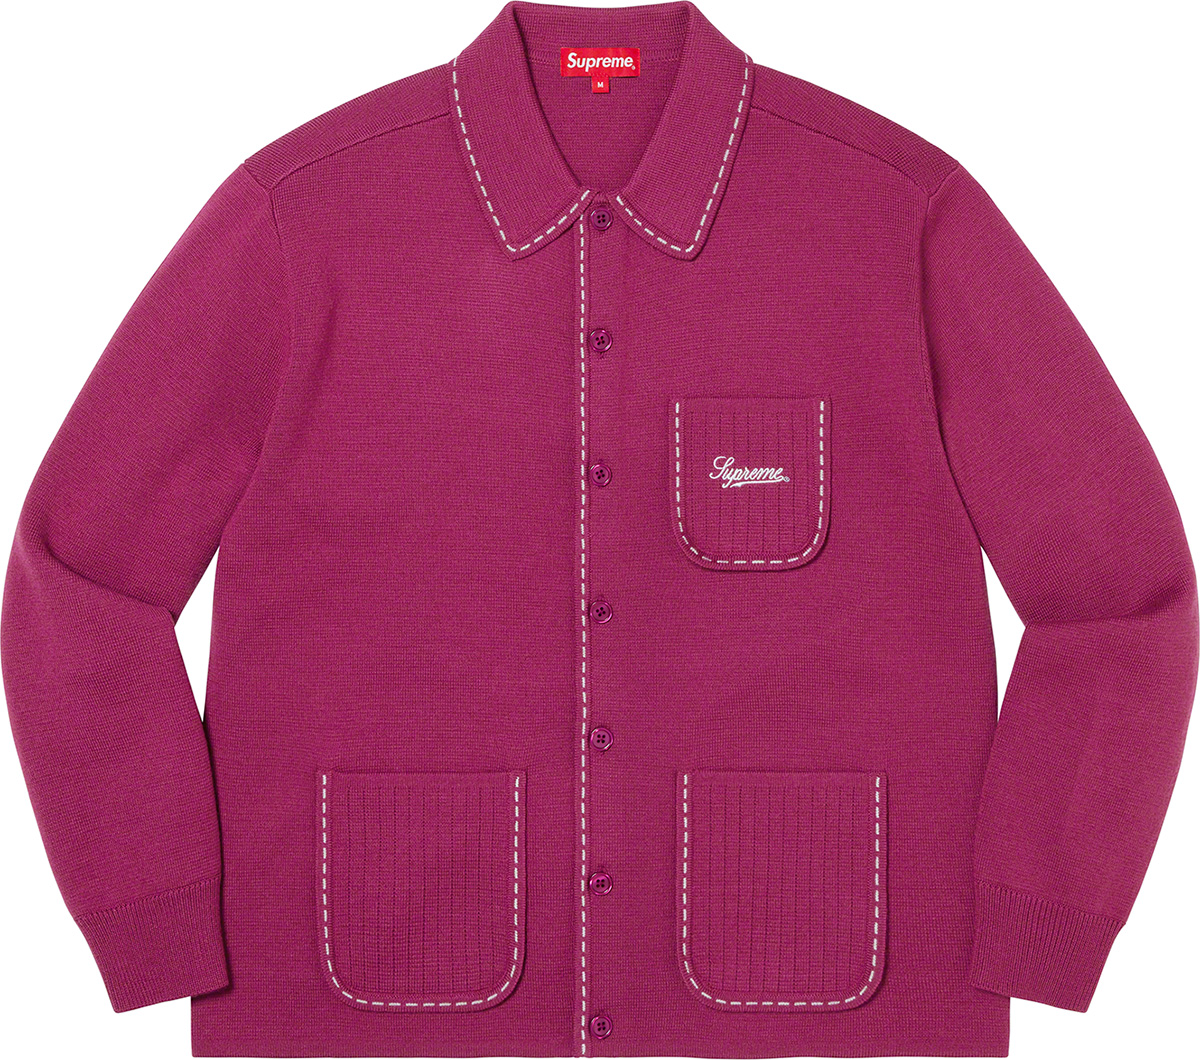 寸法着丈67㎝身幅57㎝袖丈㎝supreme contrast stitch buttonup sweater